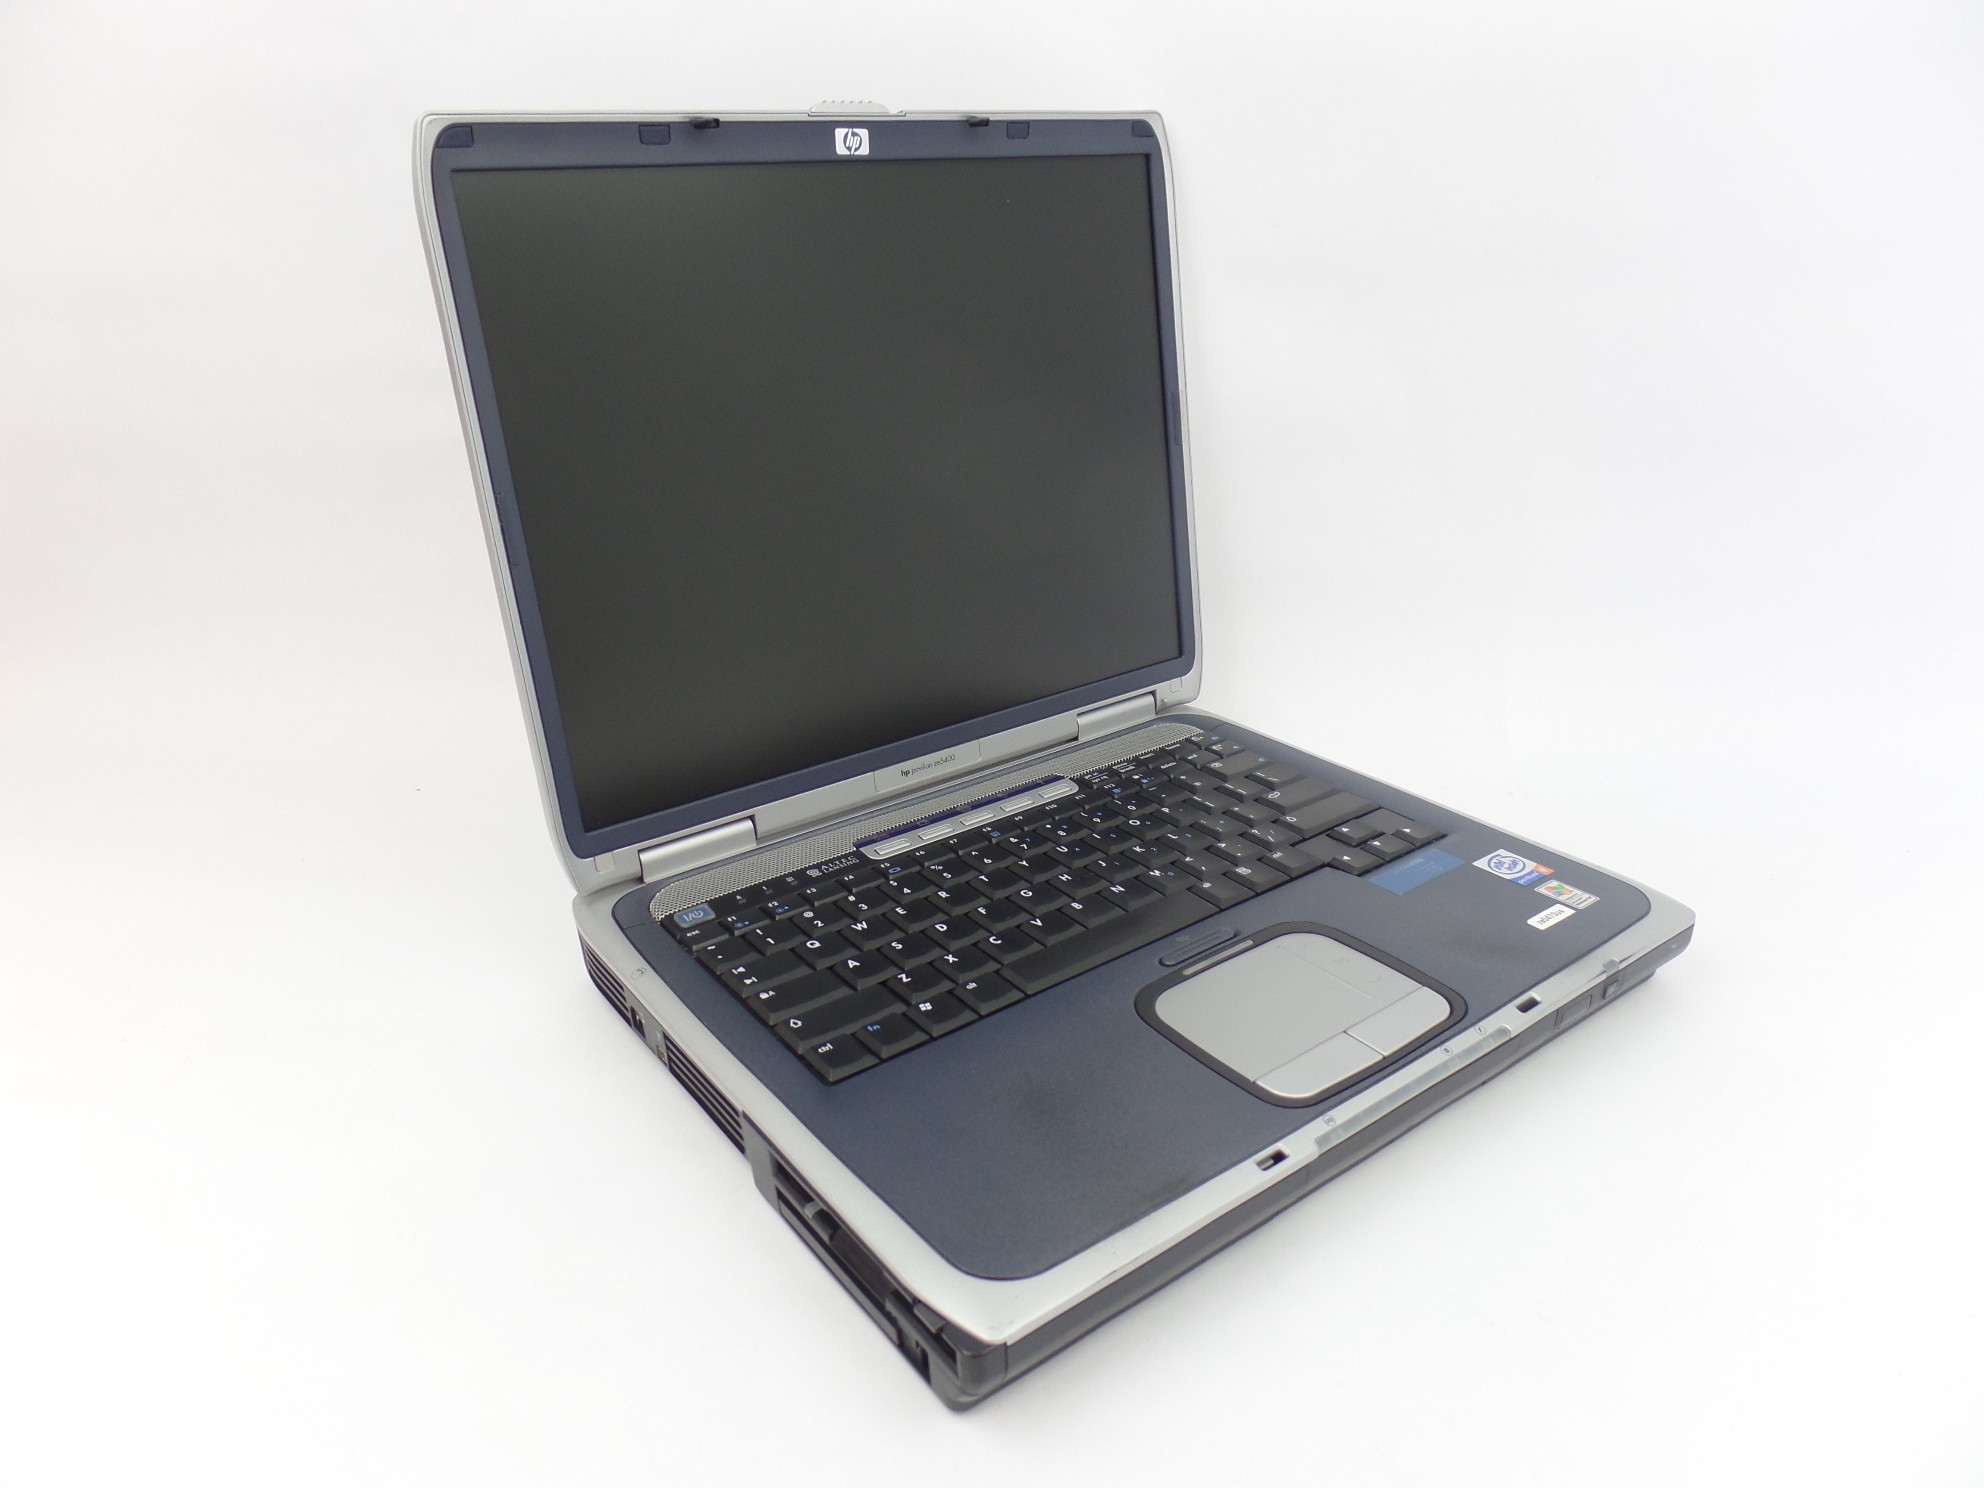 HP Pavilion Ze5470us 15.4" Intel Pentium 512MB 100GB Laptop Boots to BIOS